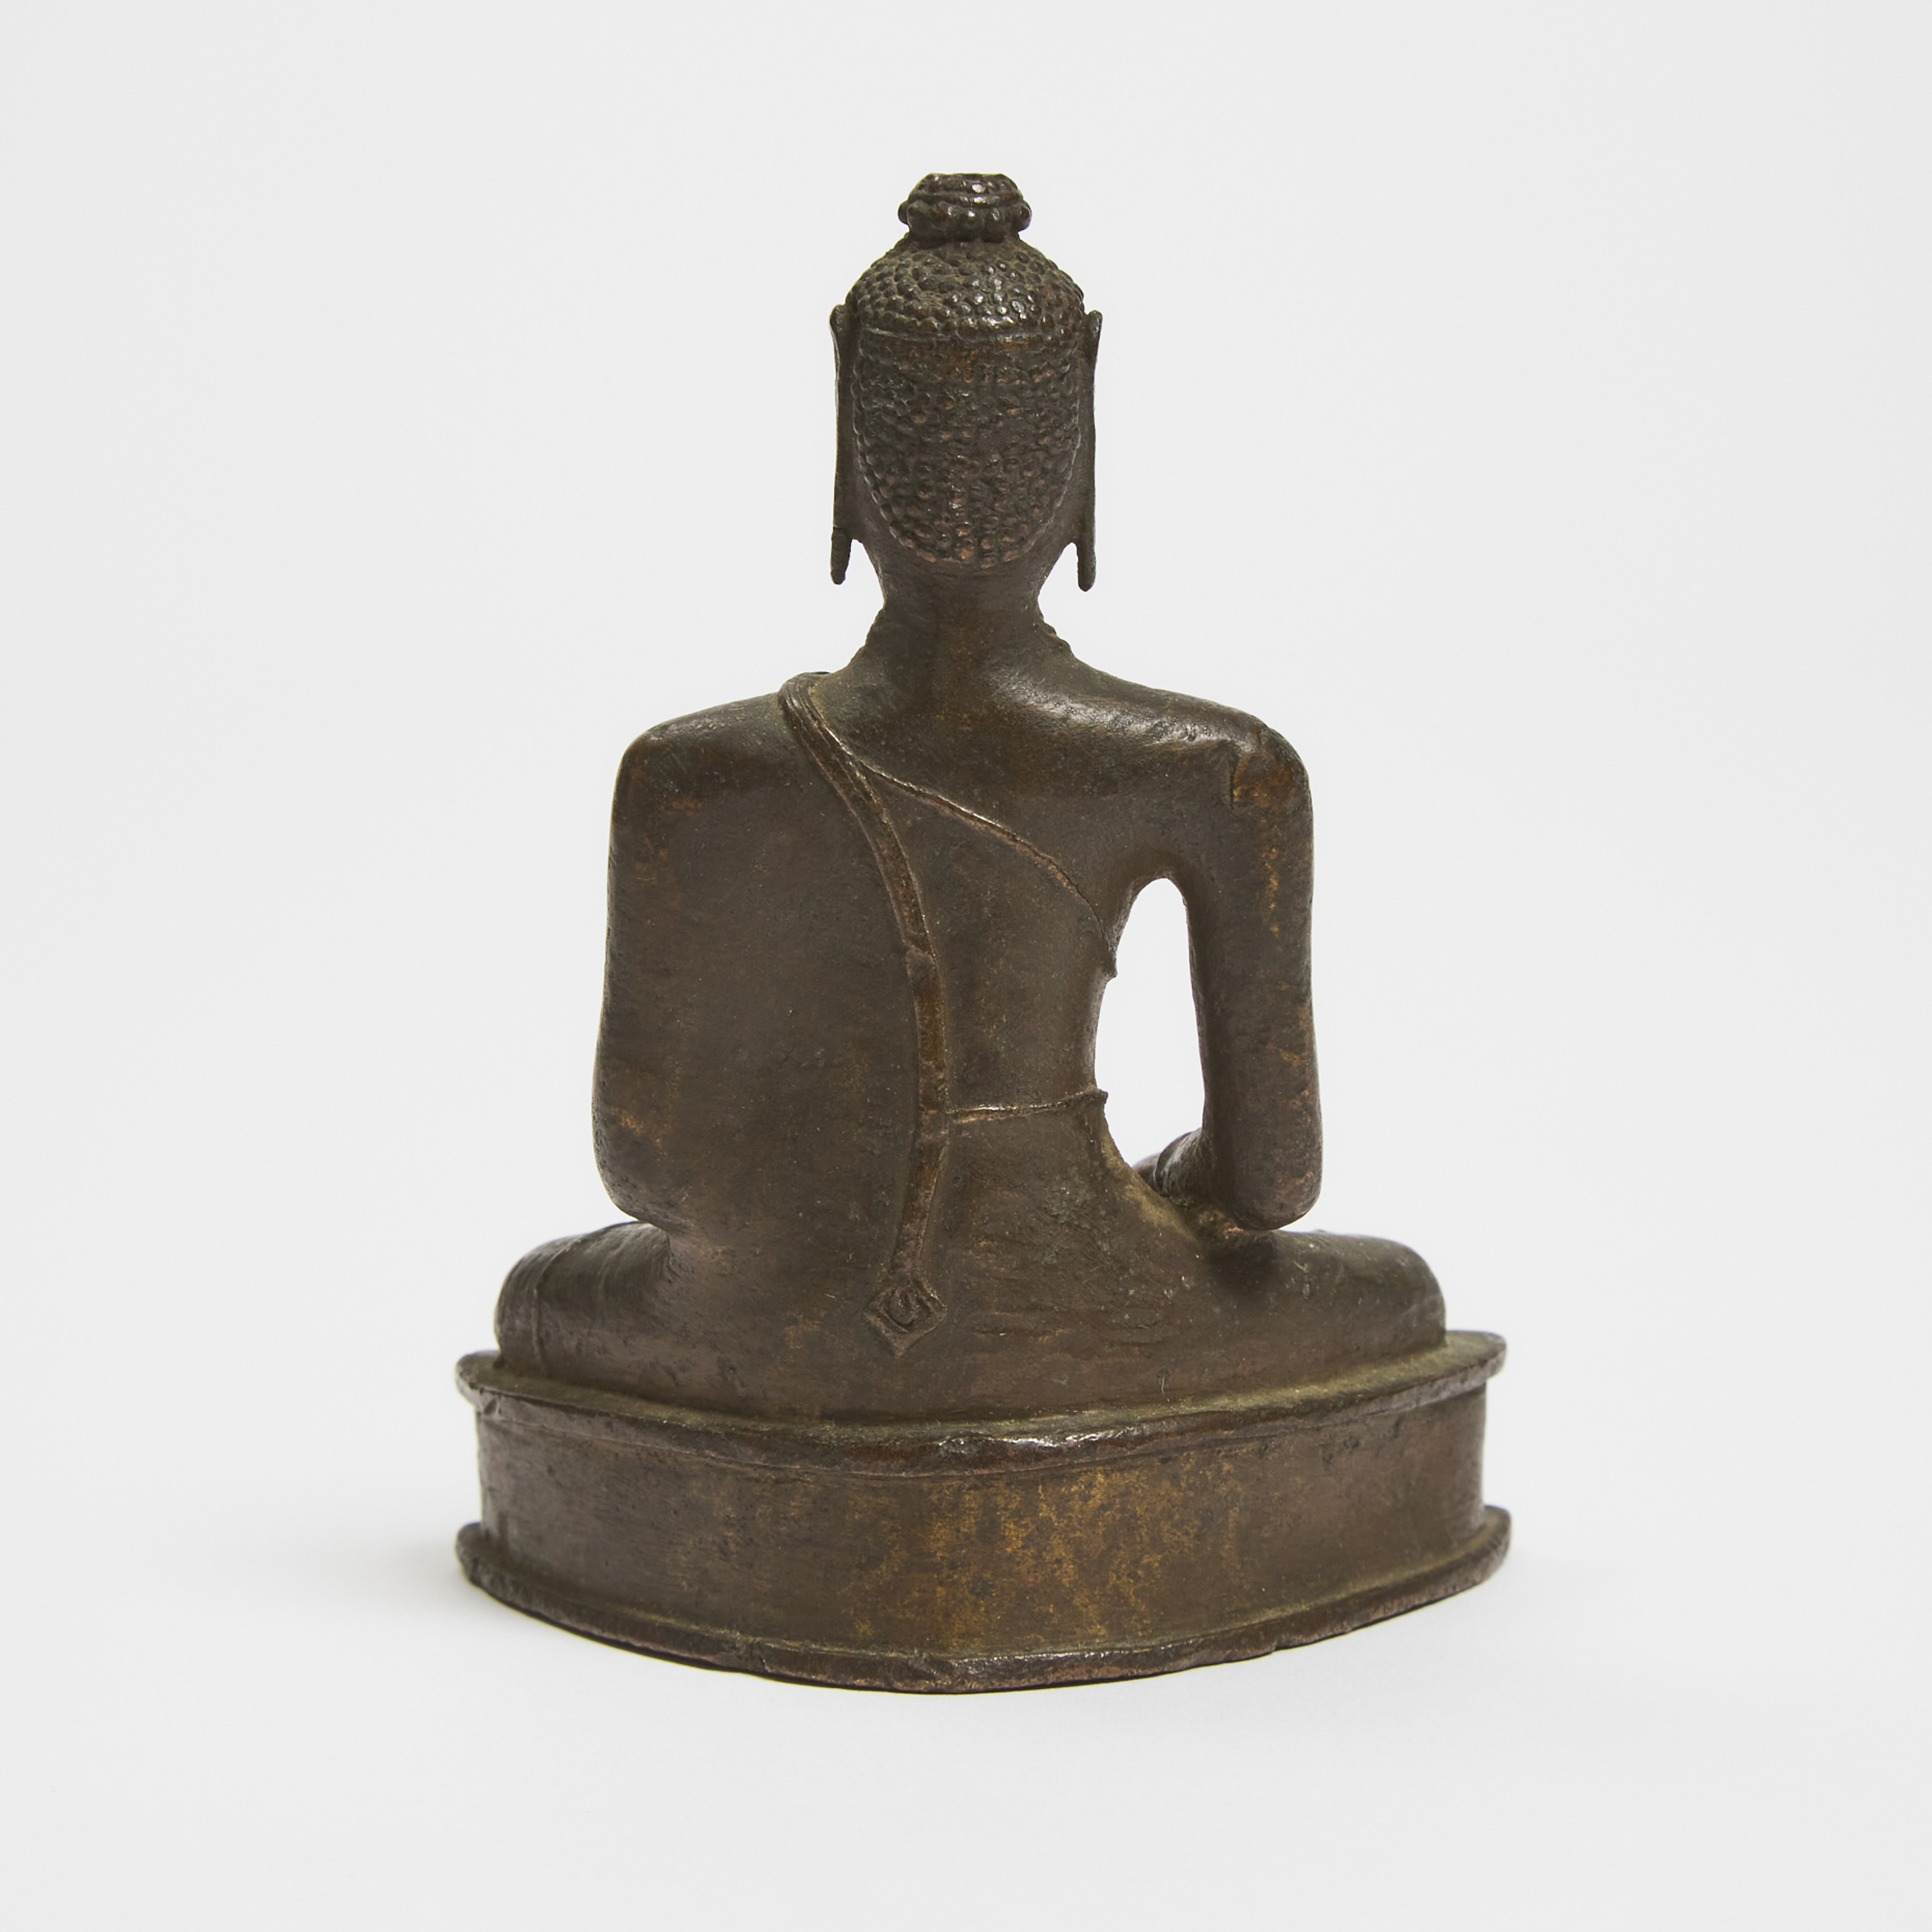 A Small Bronze Figure of Buddha, Sri Lanka, 16th Century